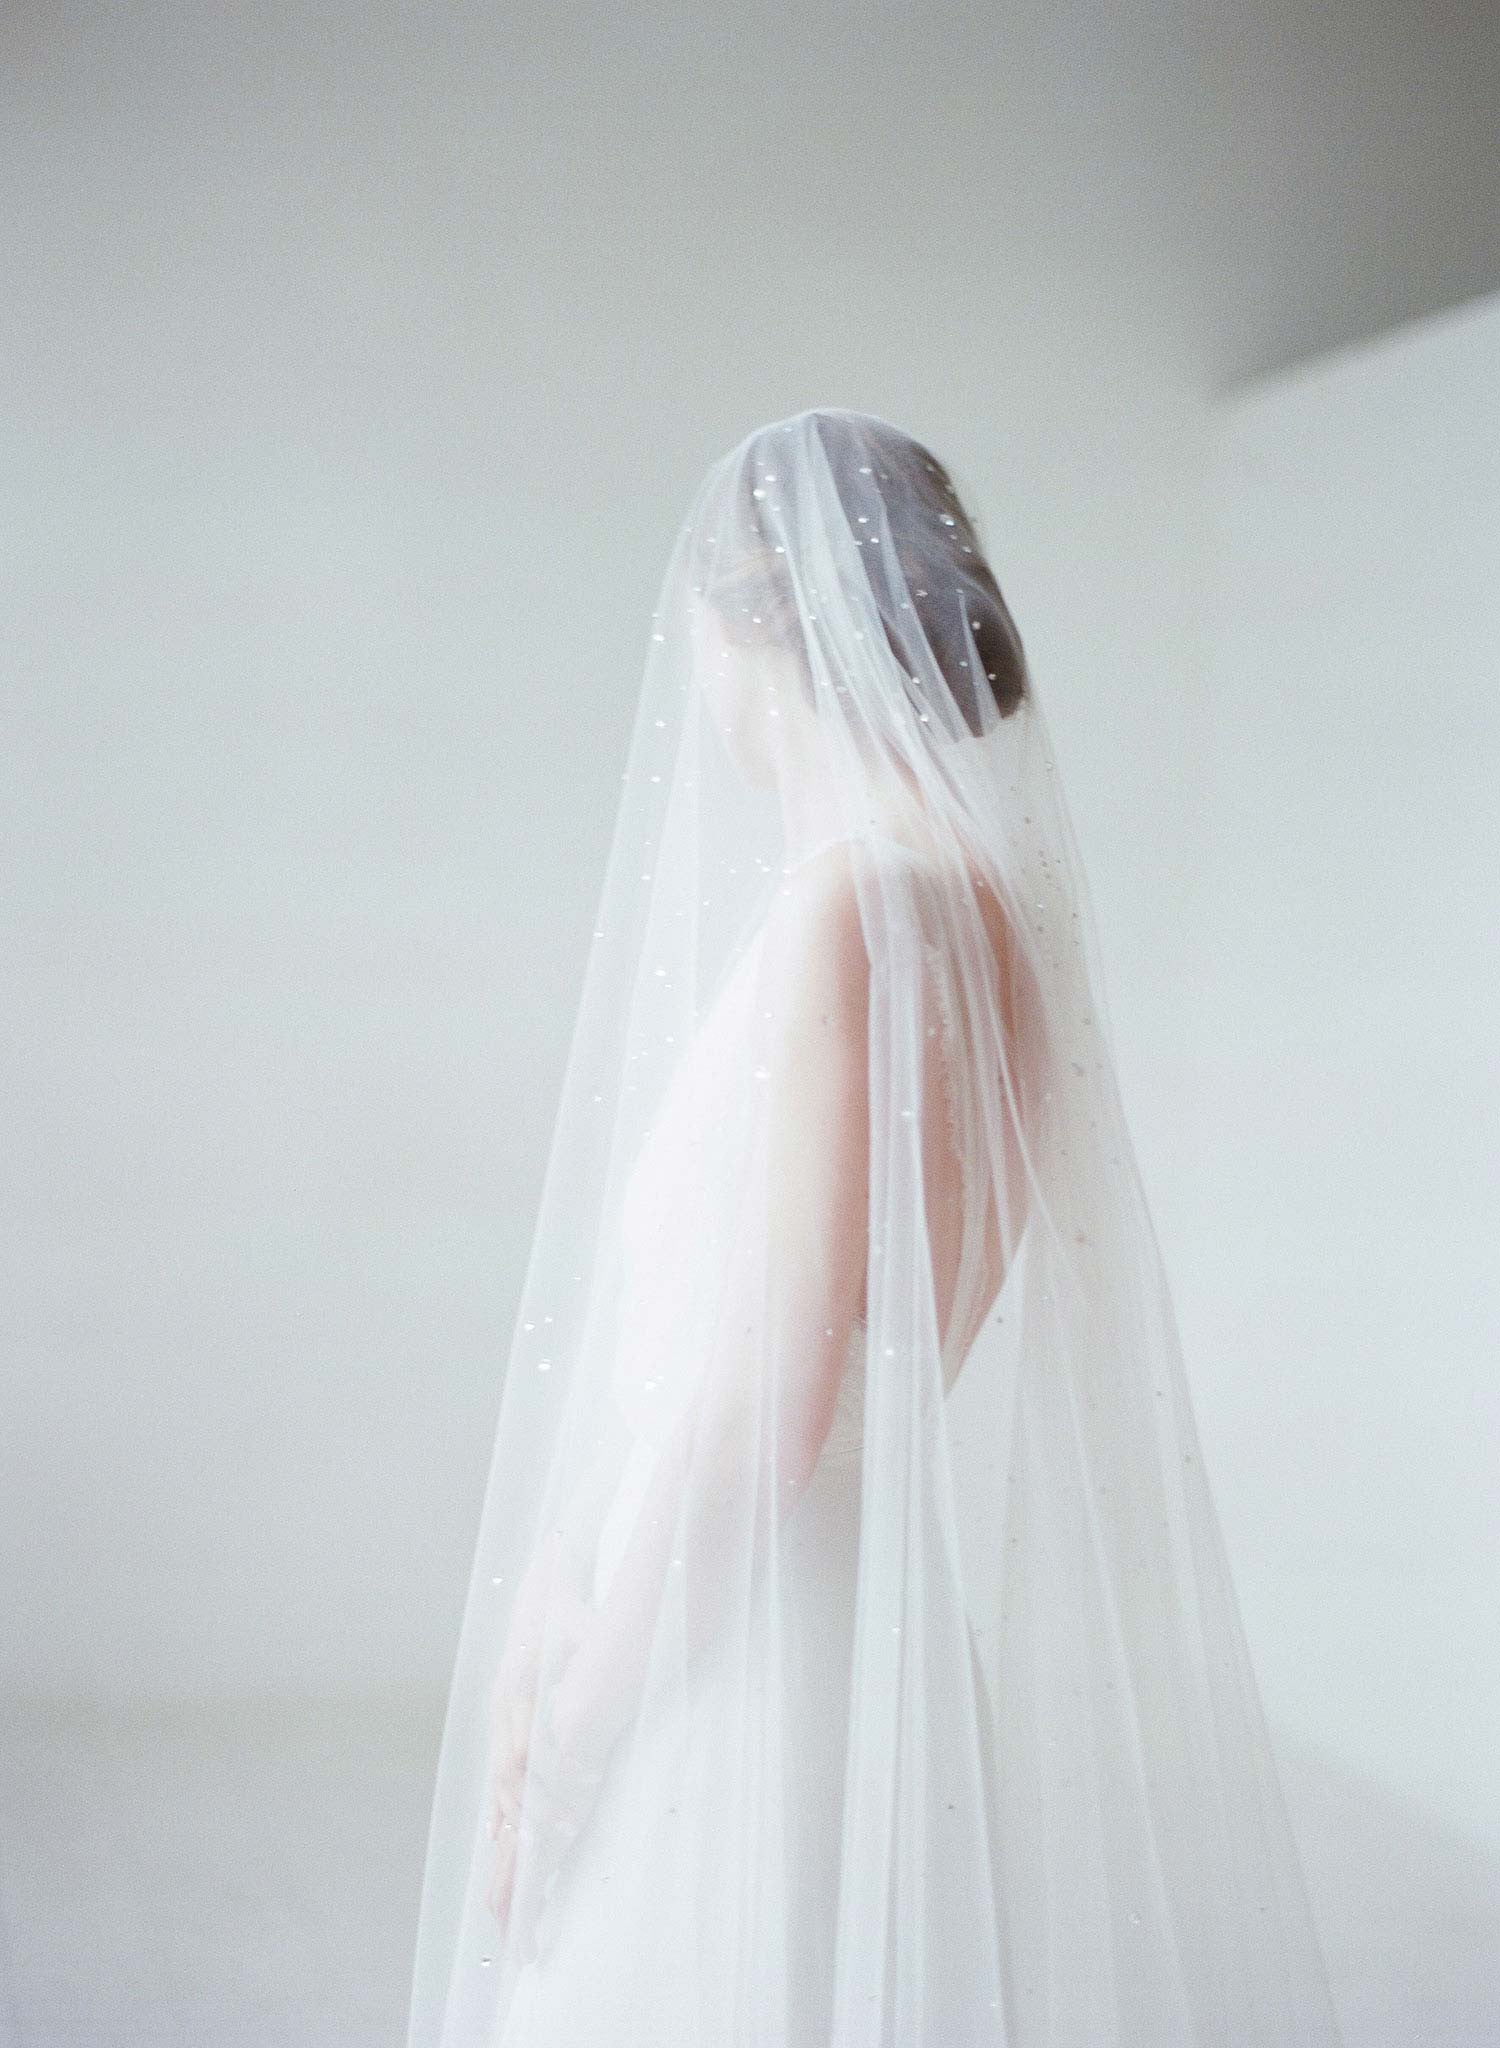 One of kind Wedding Veil, Beaded, Rhinestone and Crystal veil with ama –  Shaliz Bridal